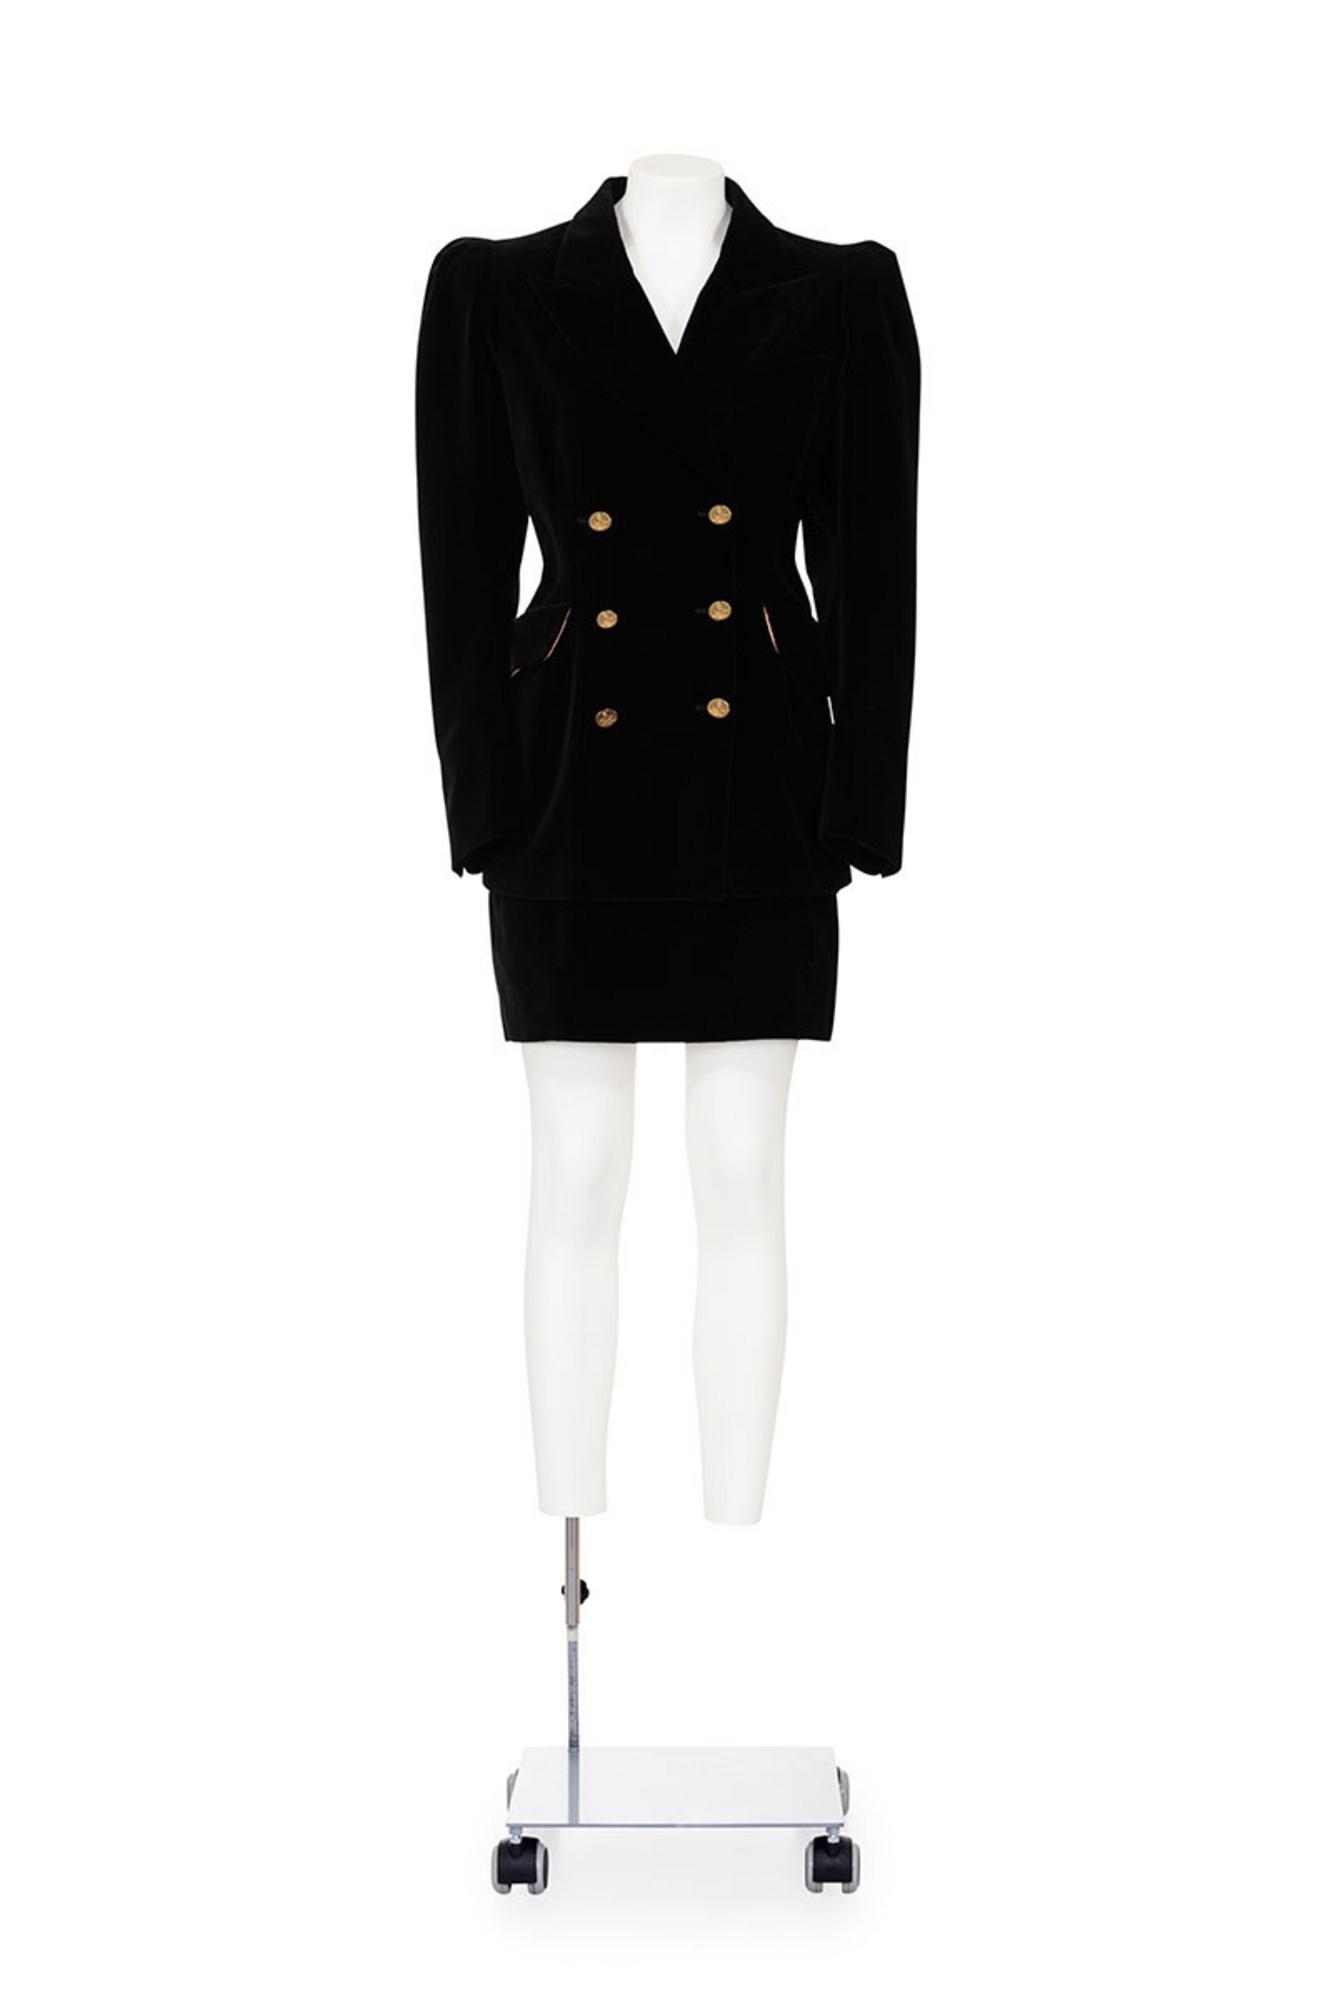 VIVIENNE WESTWOOD Iconic and rare velvet suit DESCRIPTION: Iconic and rare...